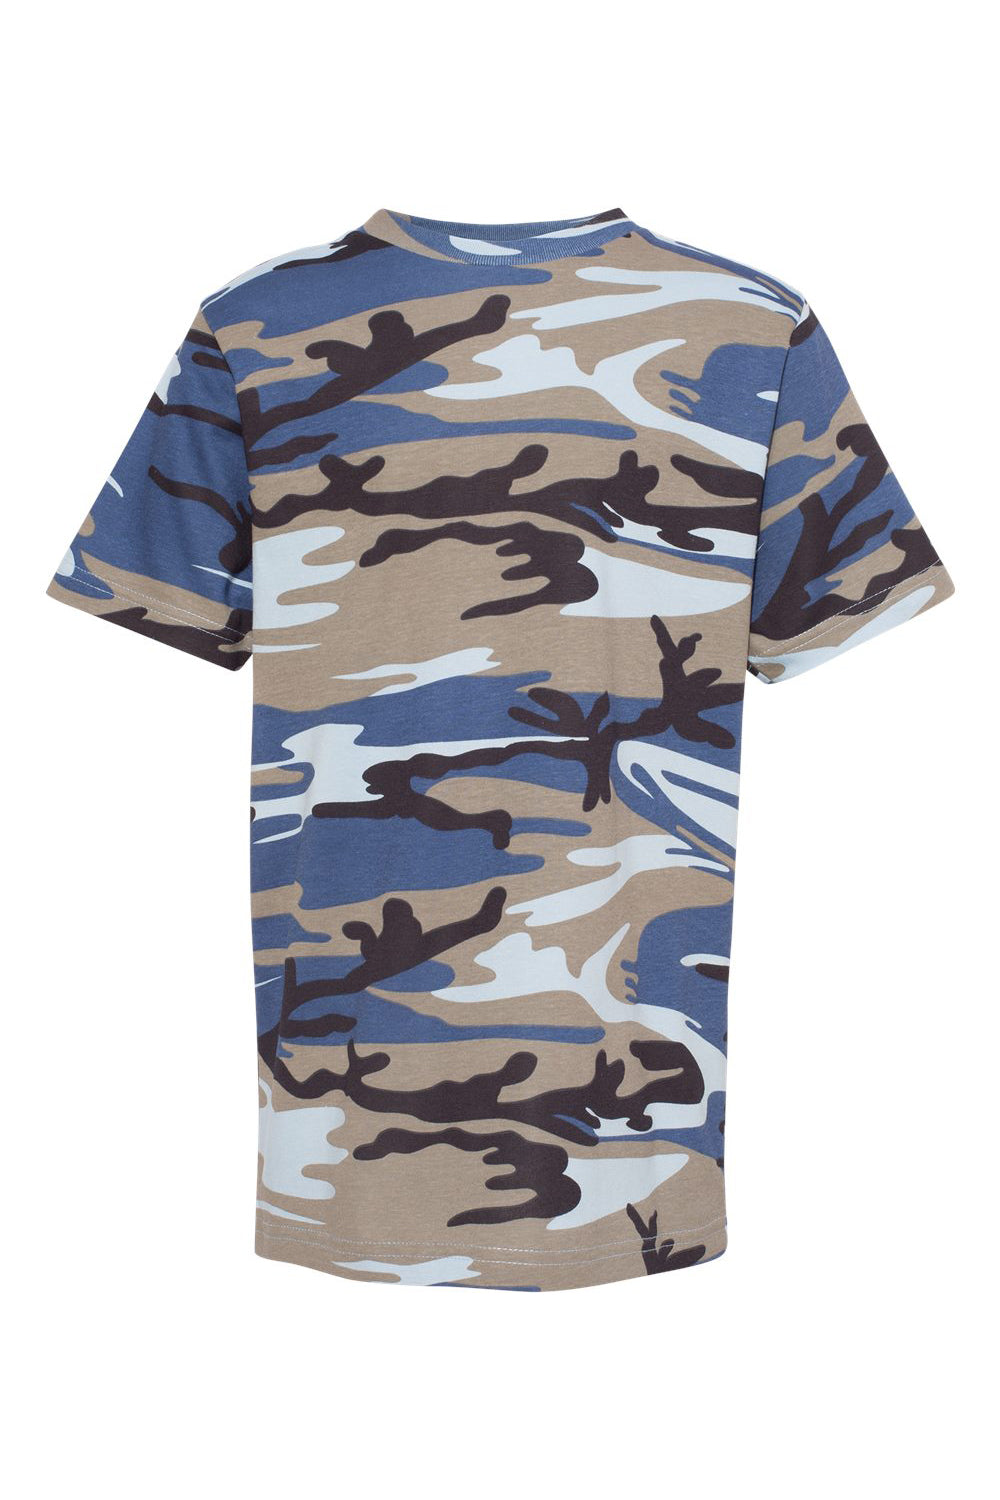 Code Five 2207 Youth Short Sleeve Crewneck T-Shirt Blue Woodland Flat Front